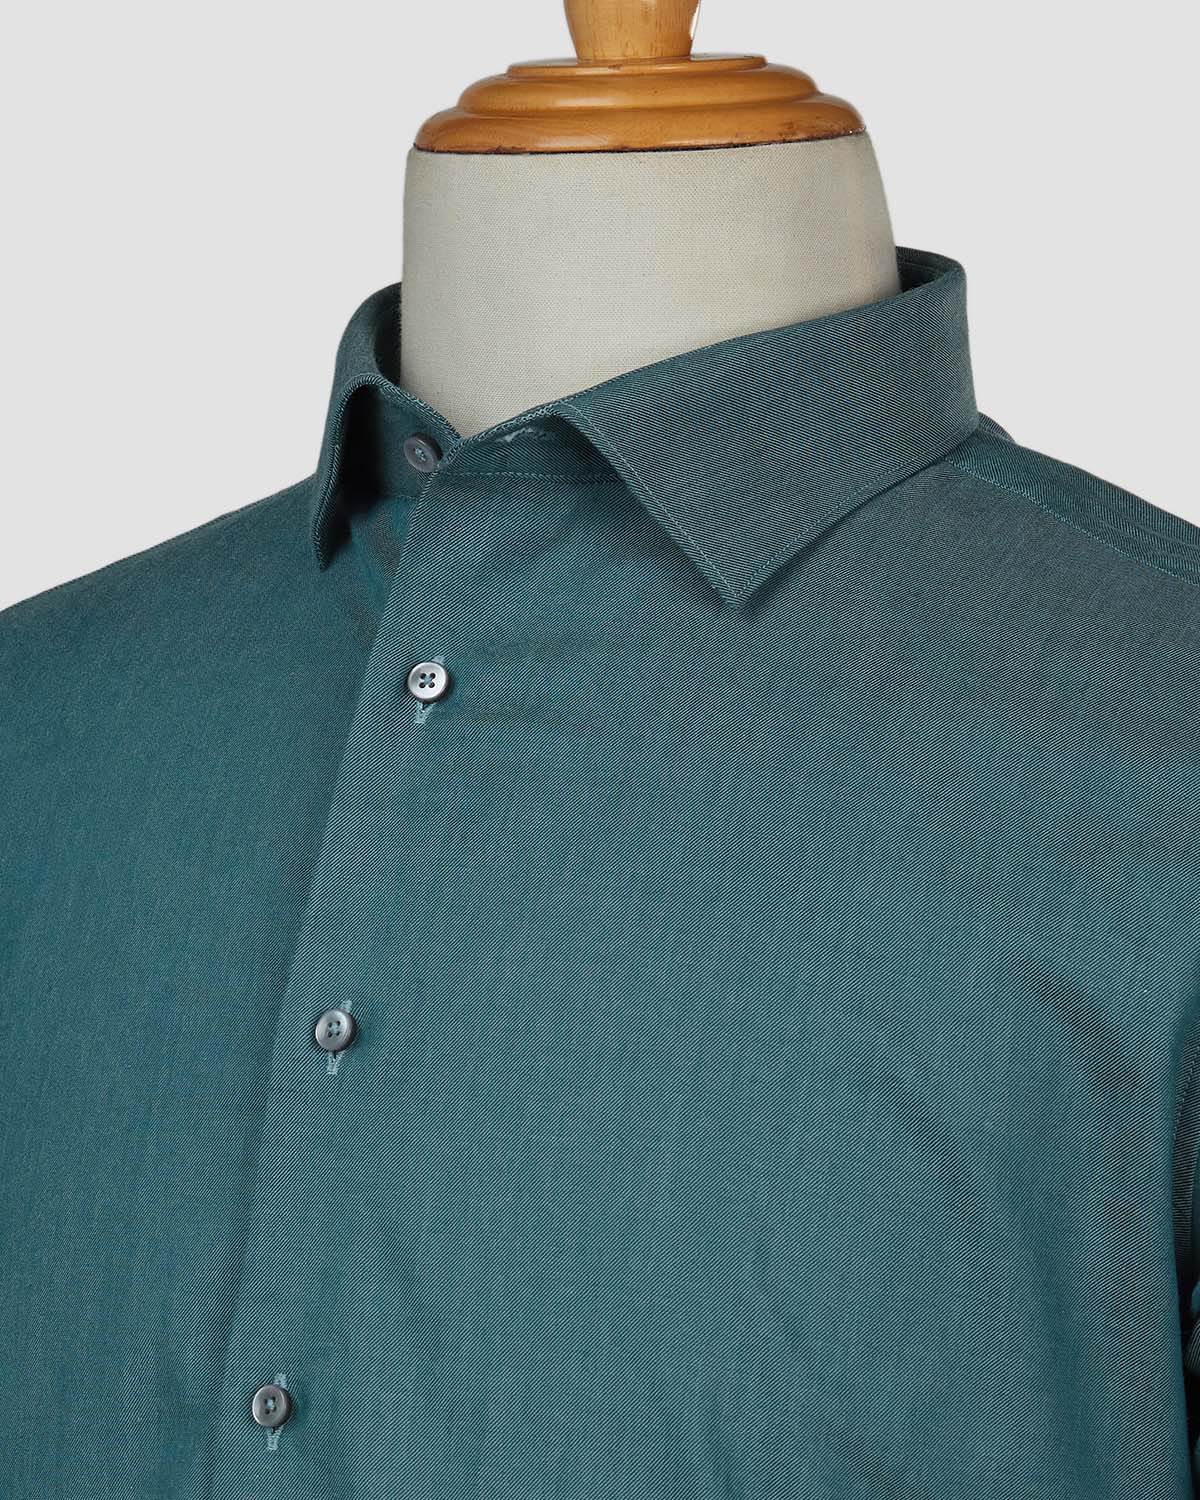 Bombay Shirt Company - Chloros Twill Shirt